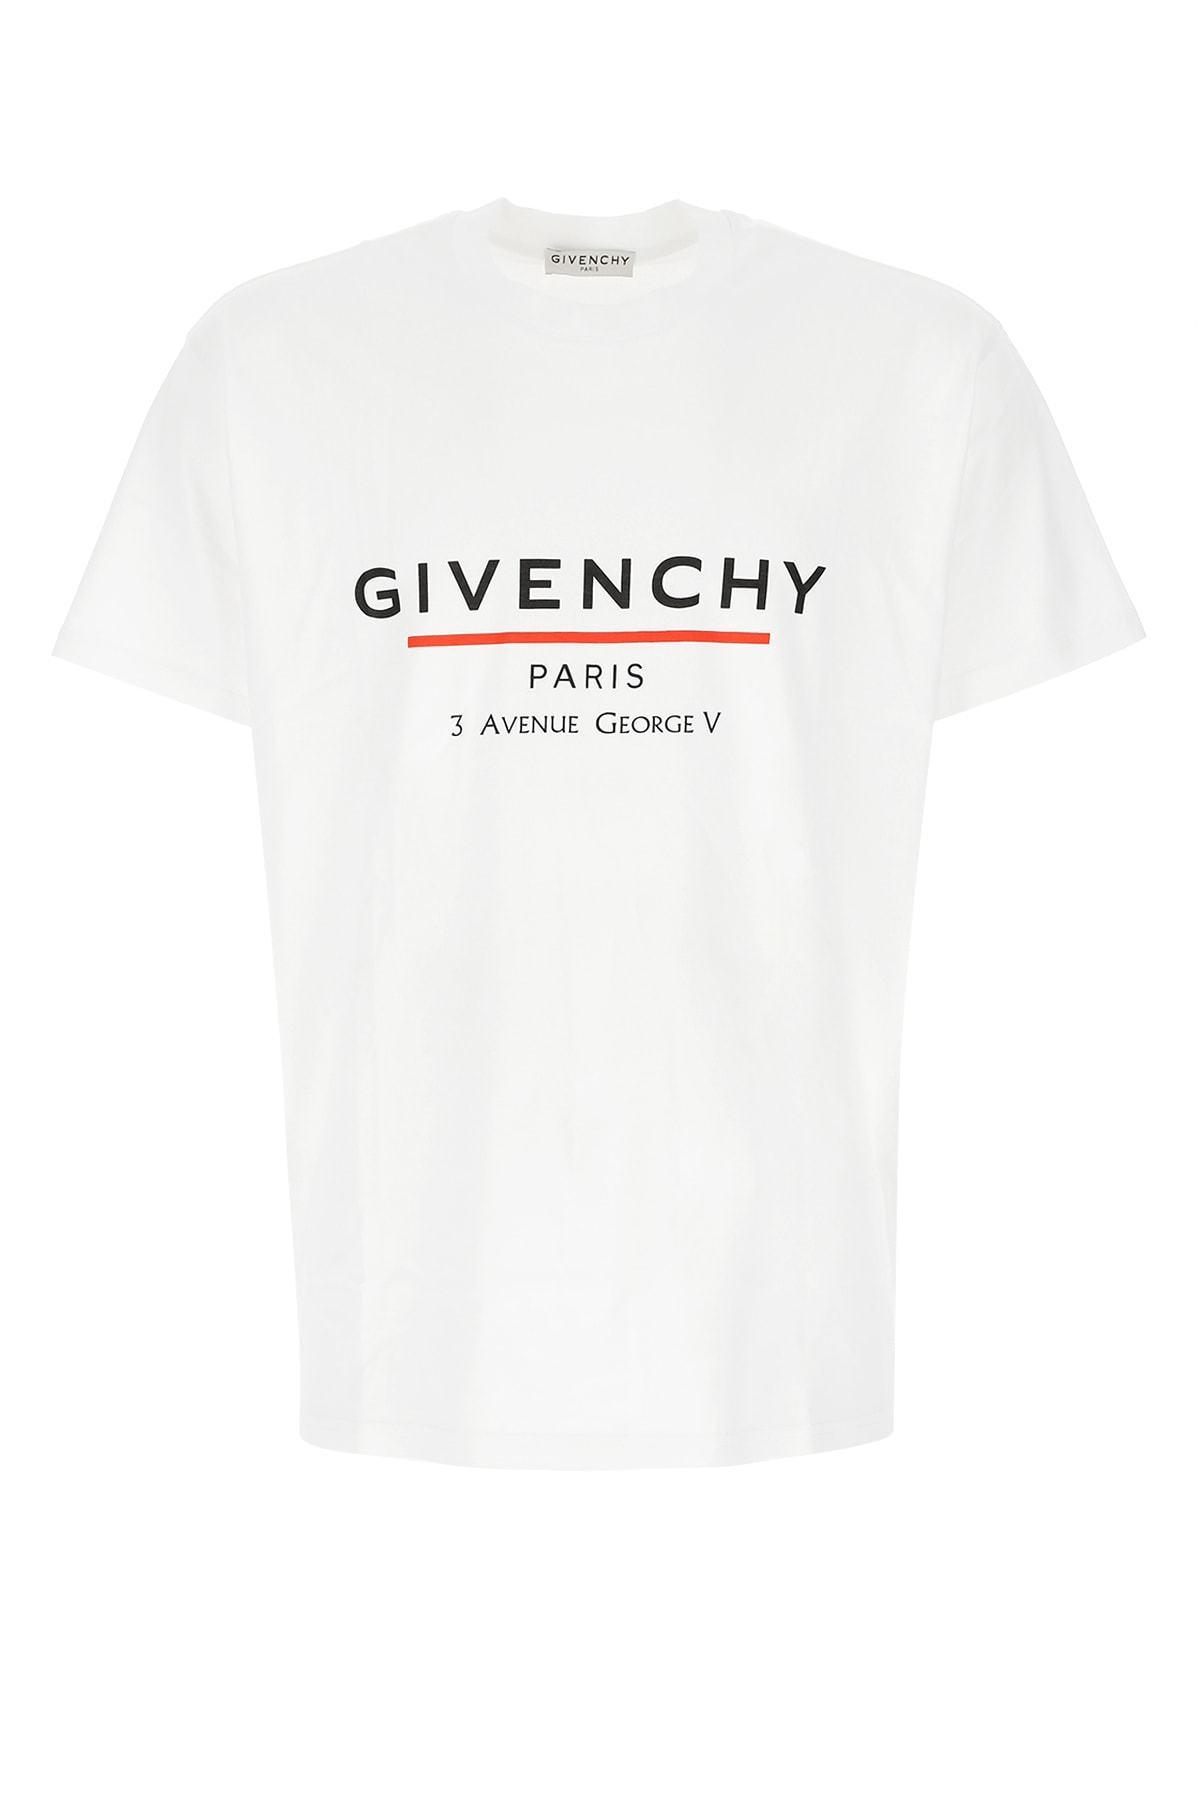 Givenchy Cotton Paris '3 Av George V 